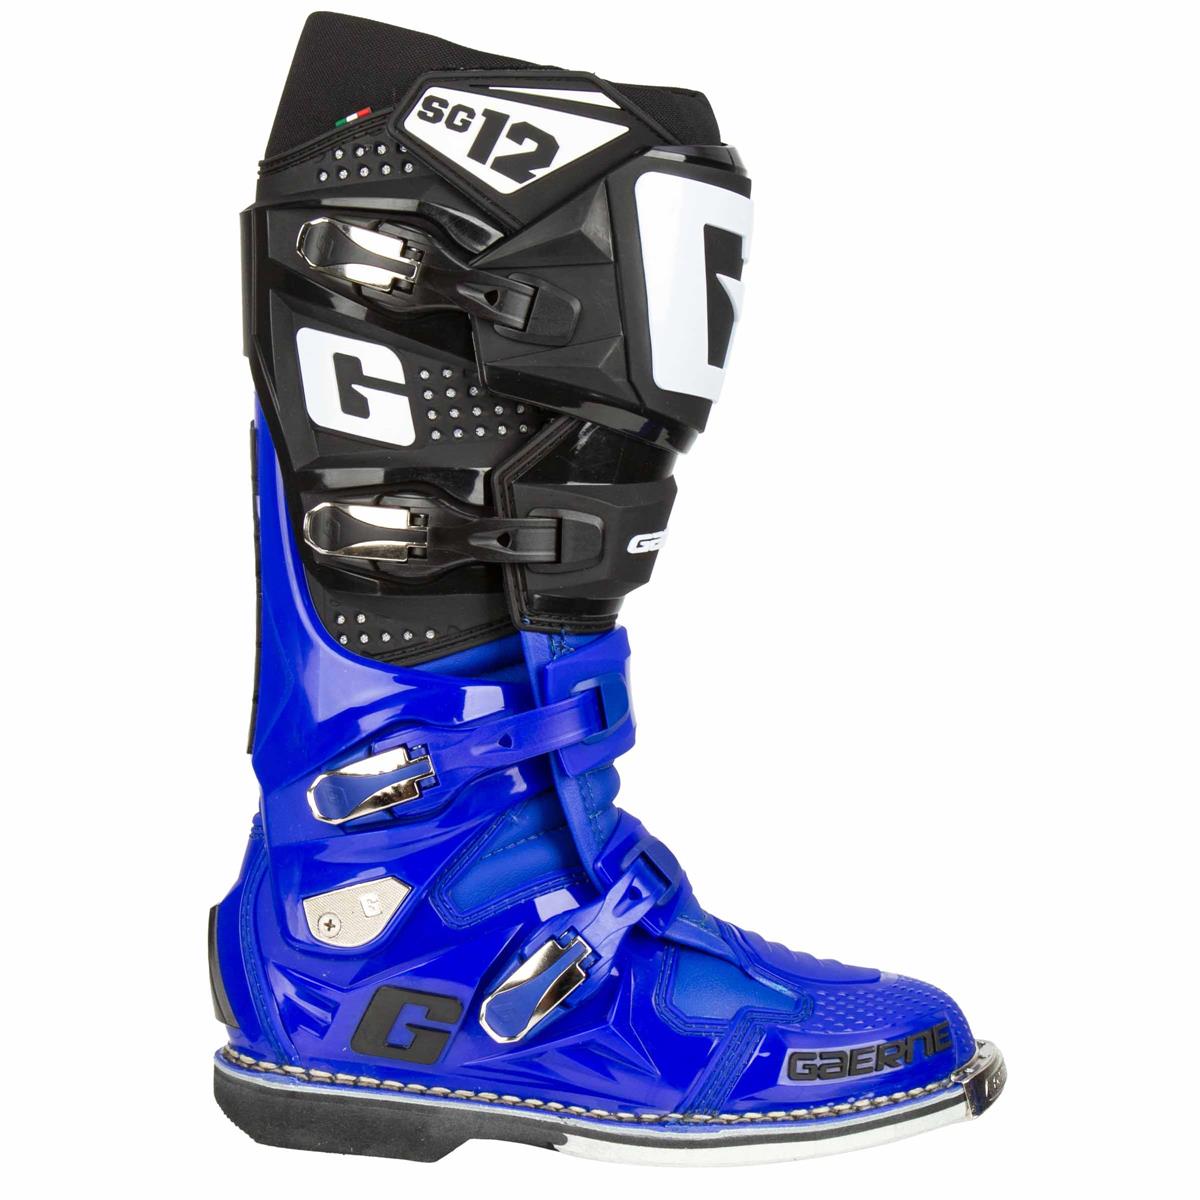 Gaerne MX Boots SG 12 Blue/Black 